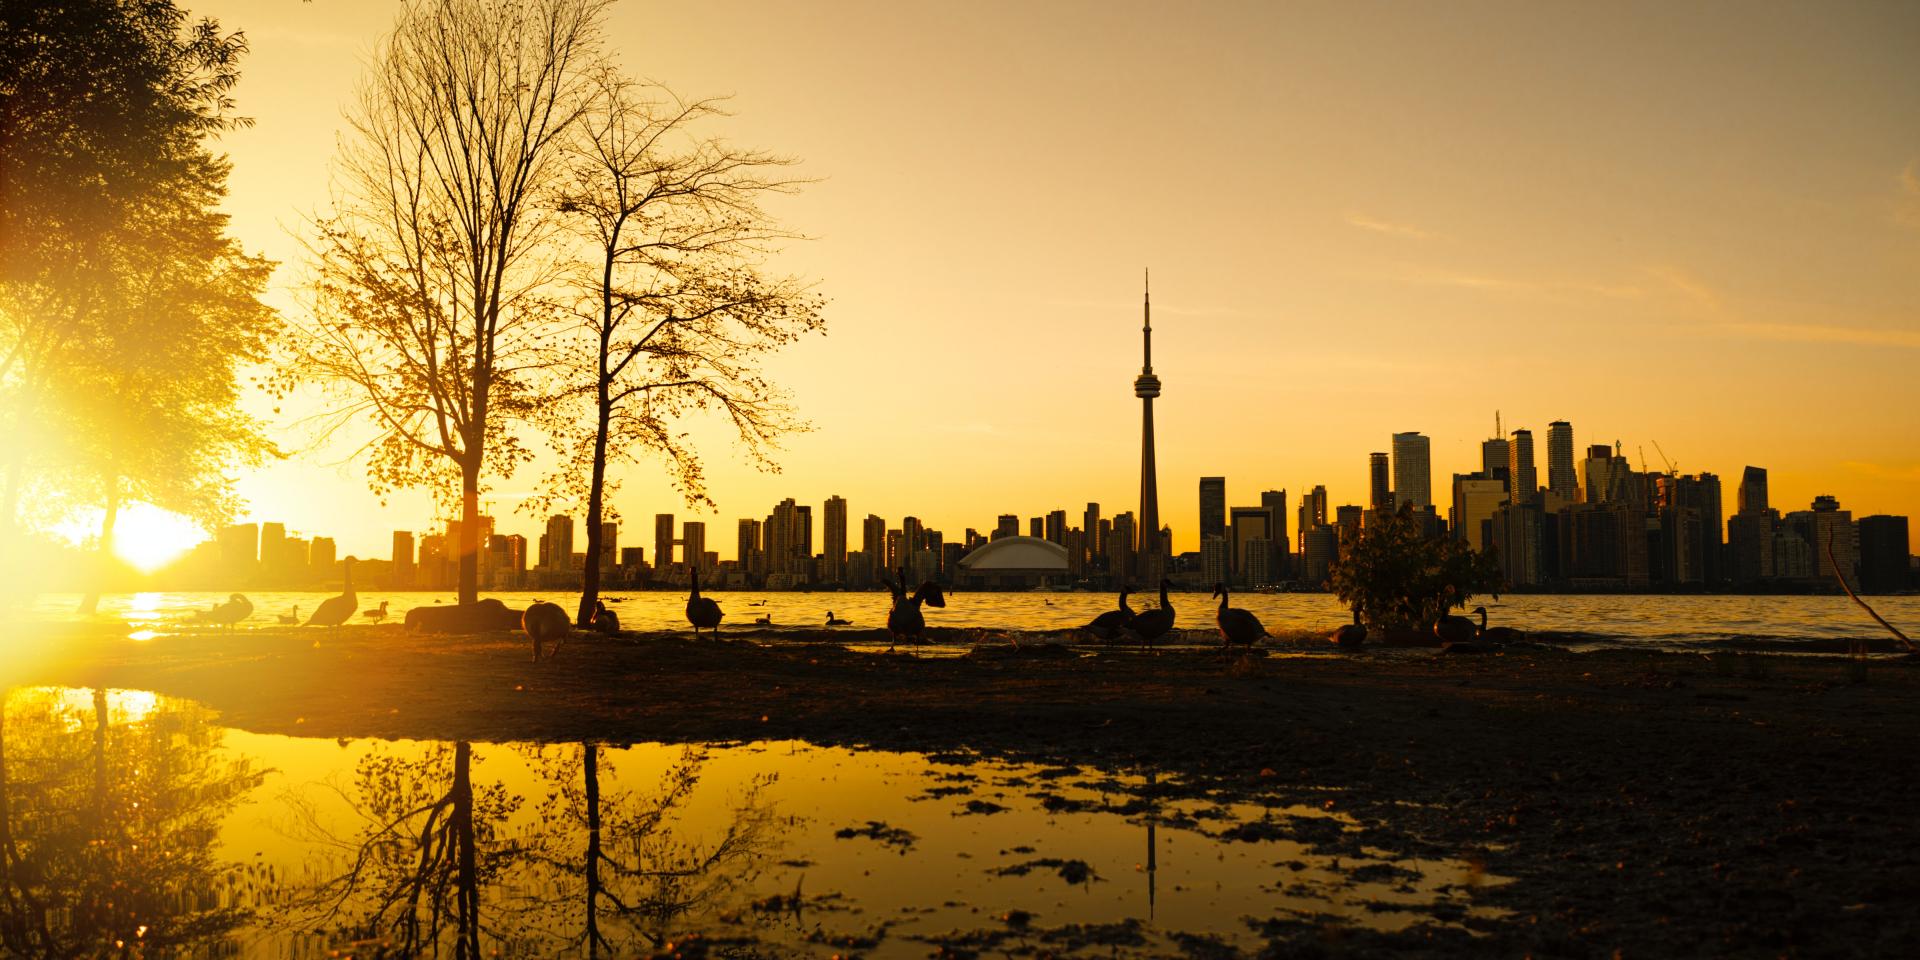 An image of the Toronto skyline as the sun sets.